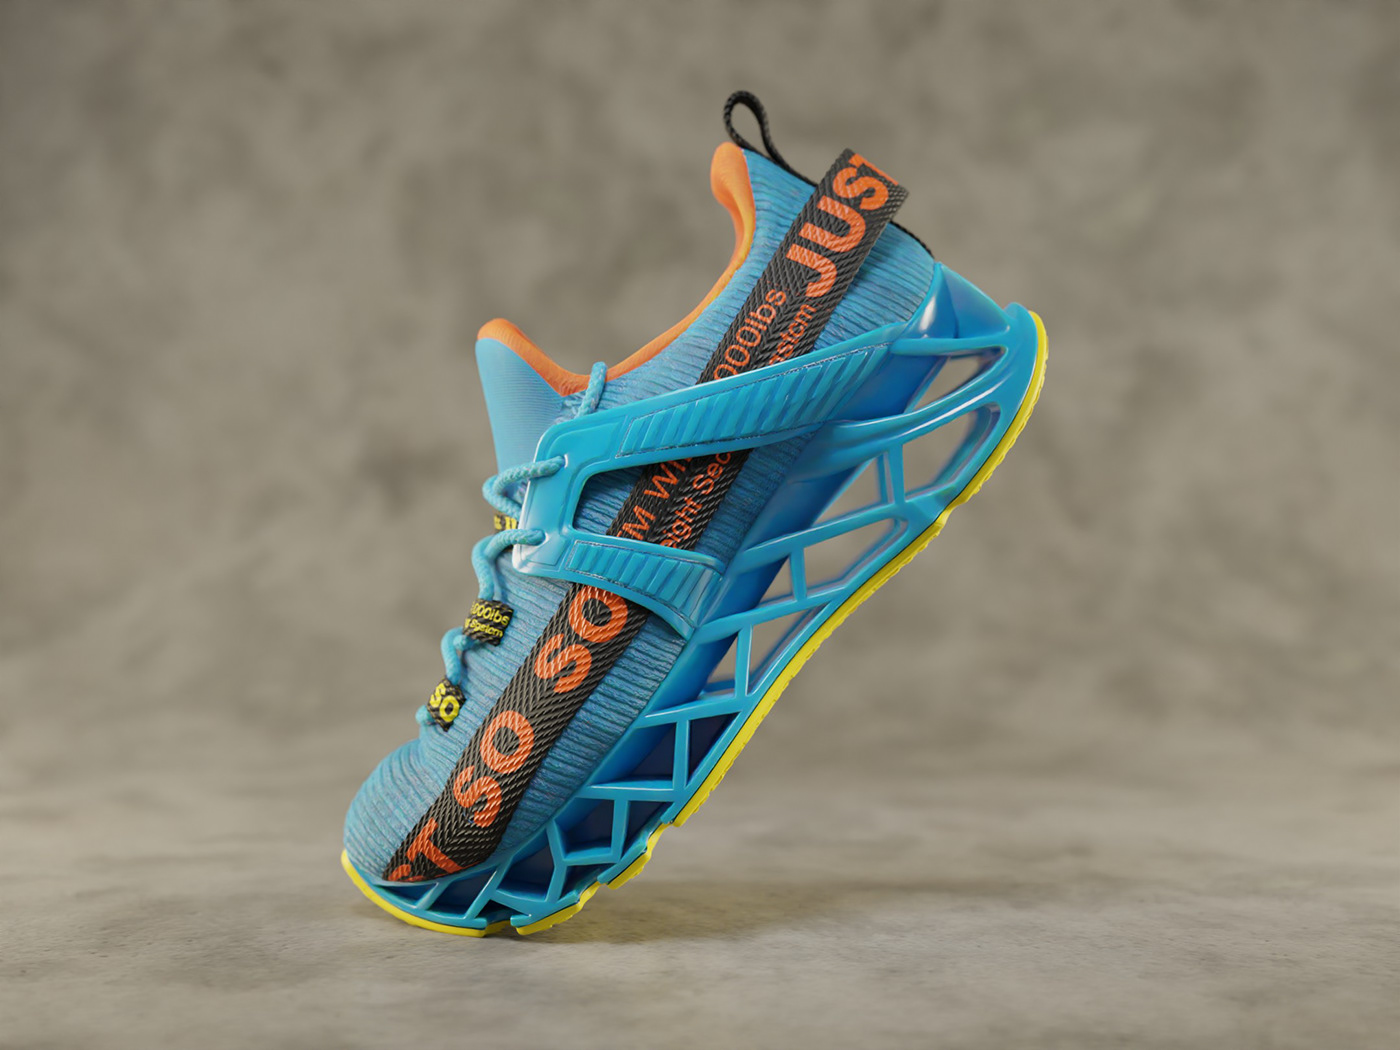 3D render of blue, orange, yellow, and black sneaker